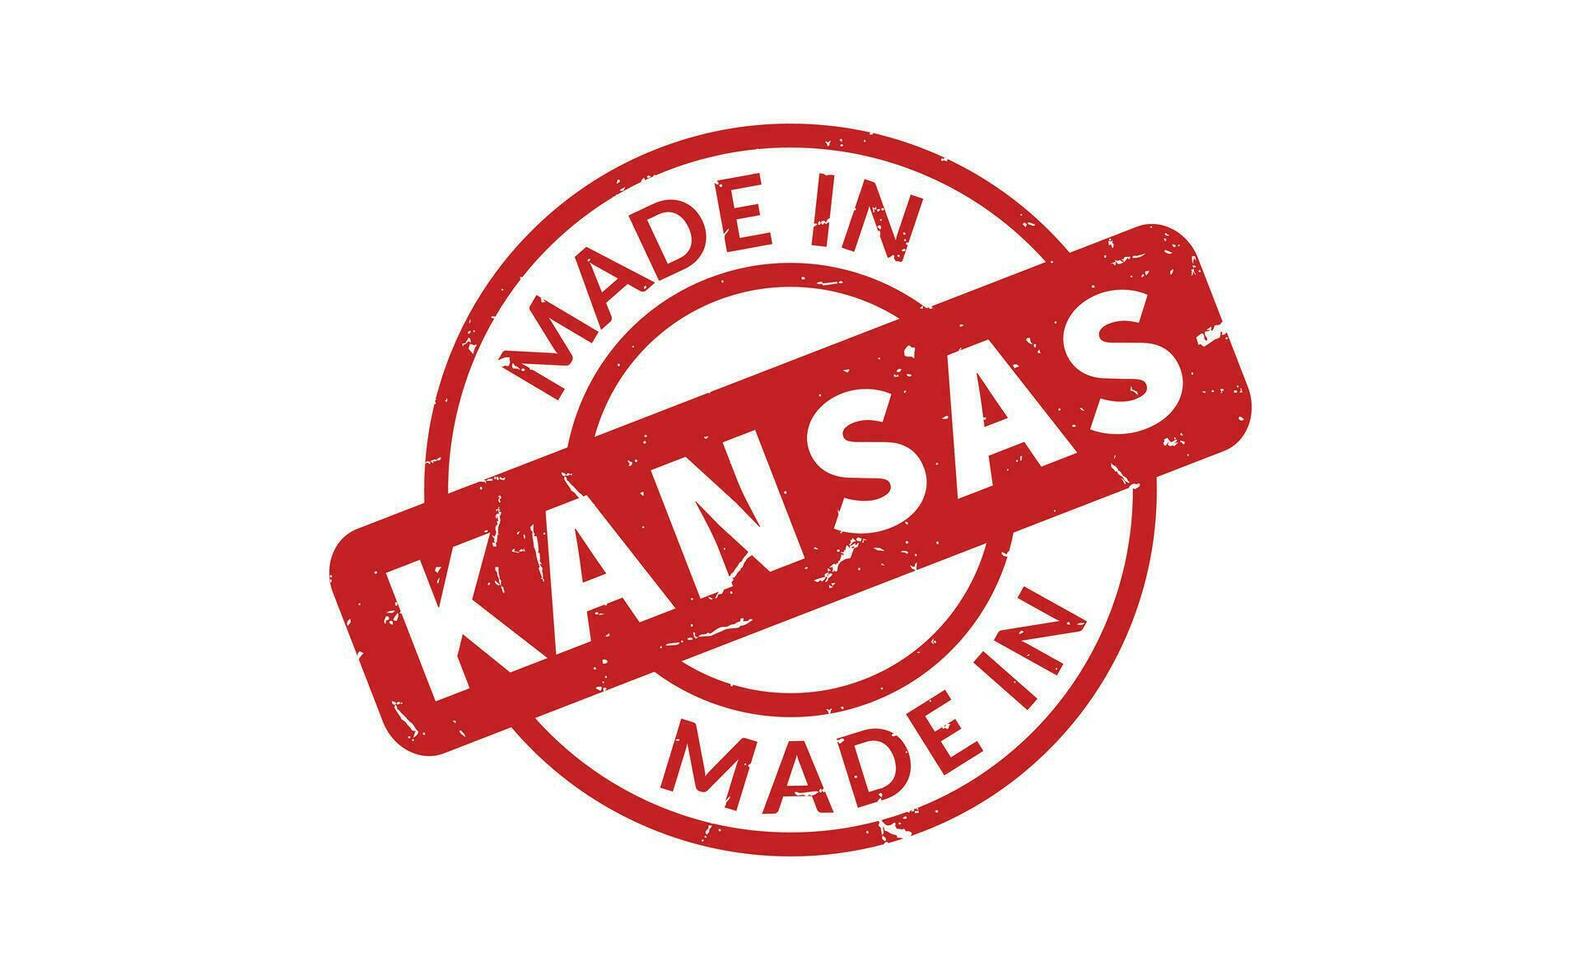 gemaakt in Kansas rubber postzegel vector